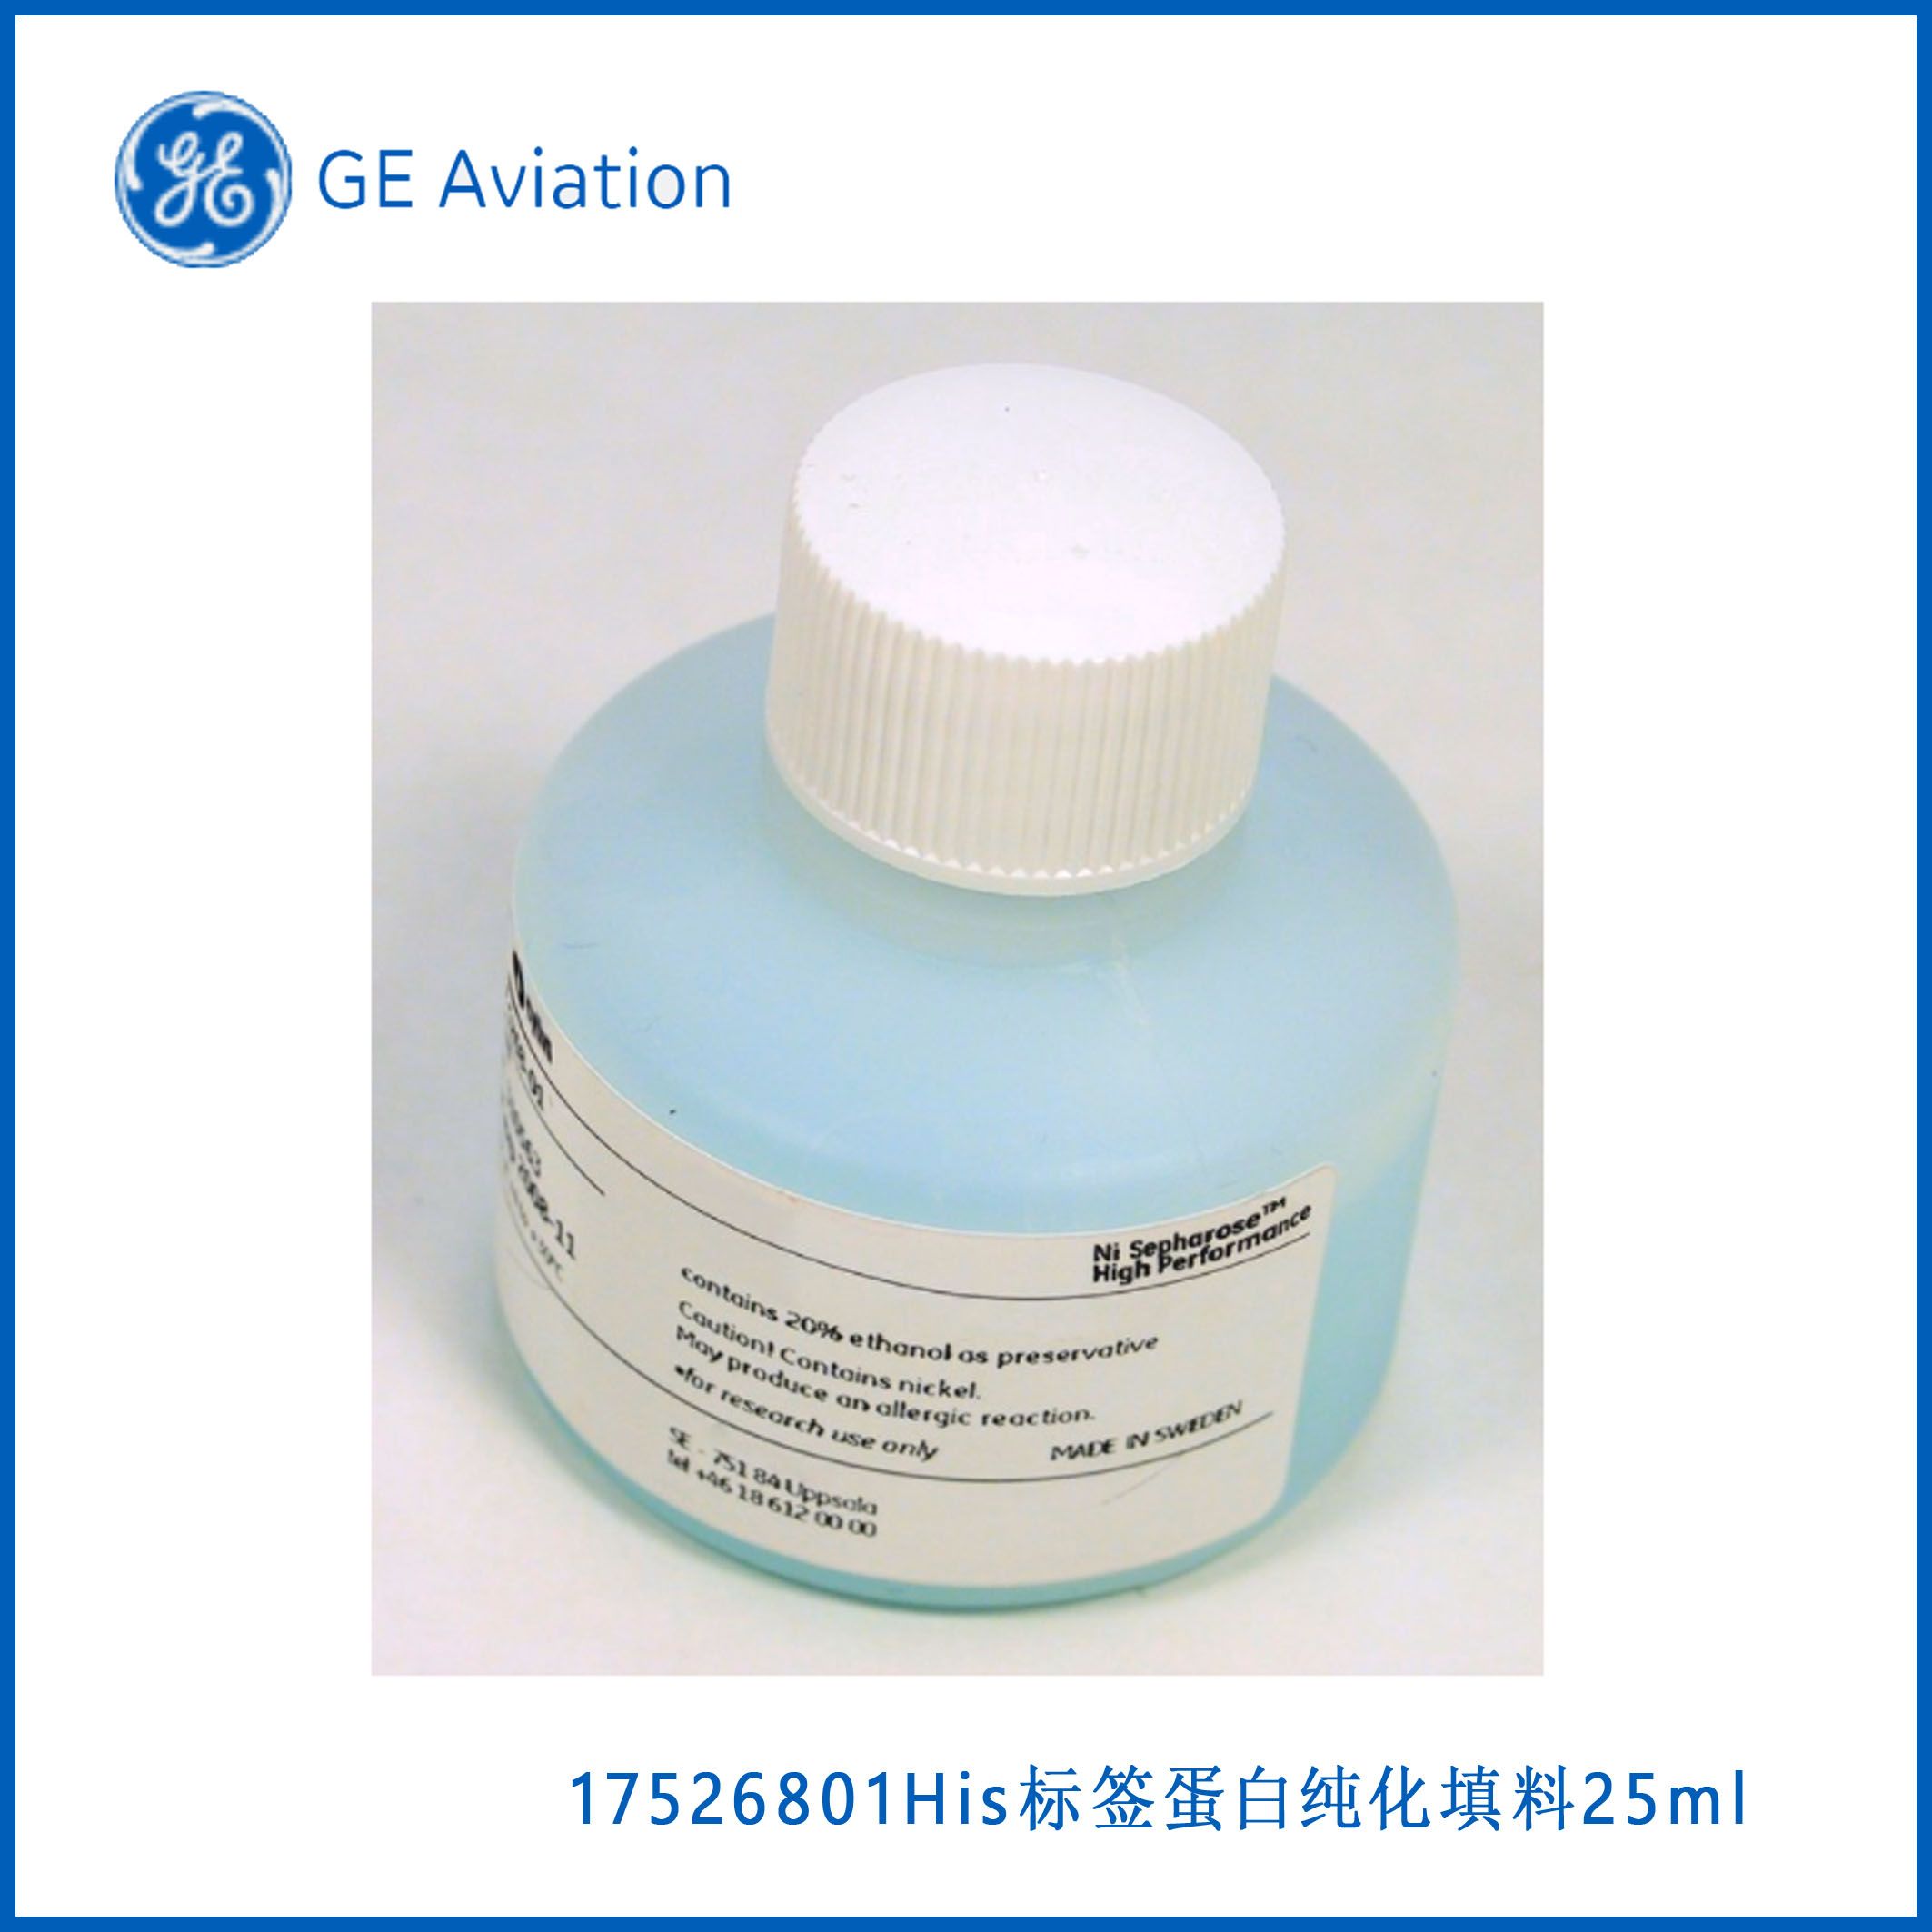 GE17526801 Ni Sepharose® High Performance, 25 ml,His标签蛋白纯化填料,现货